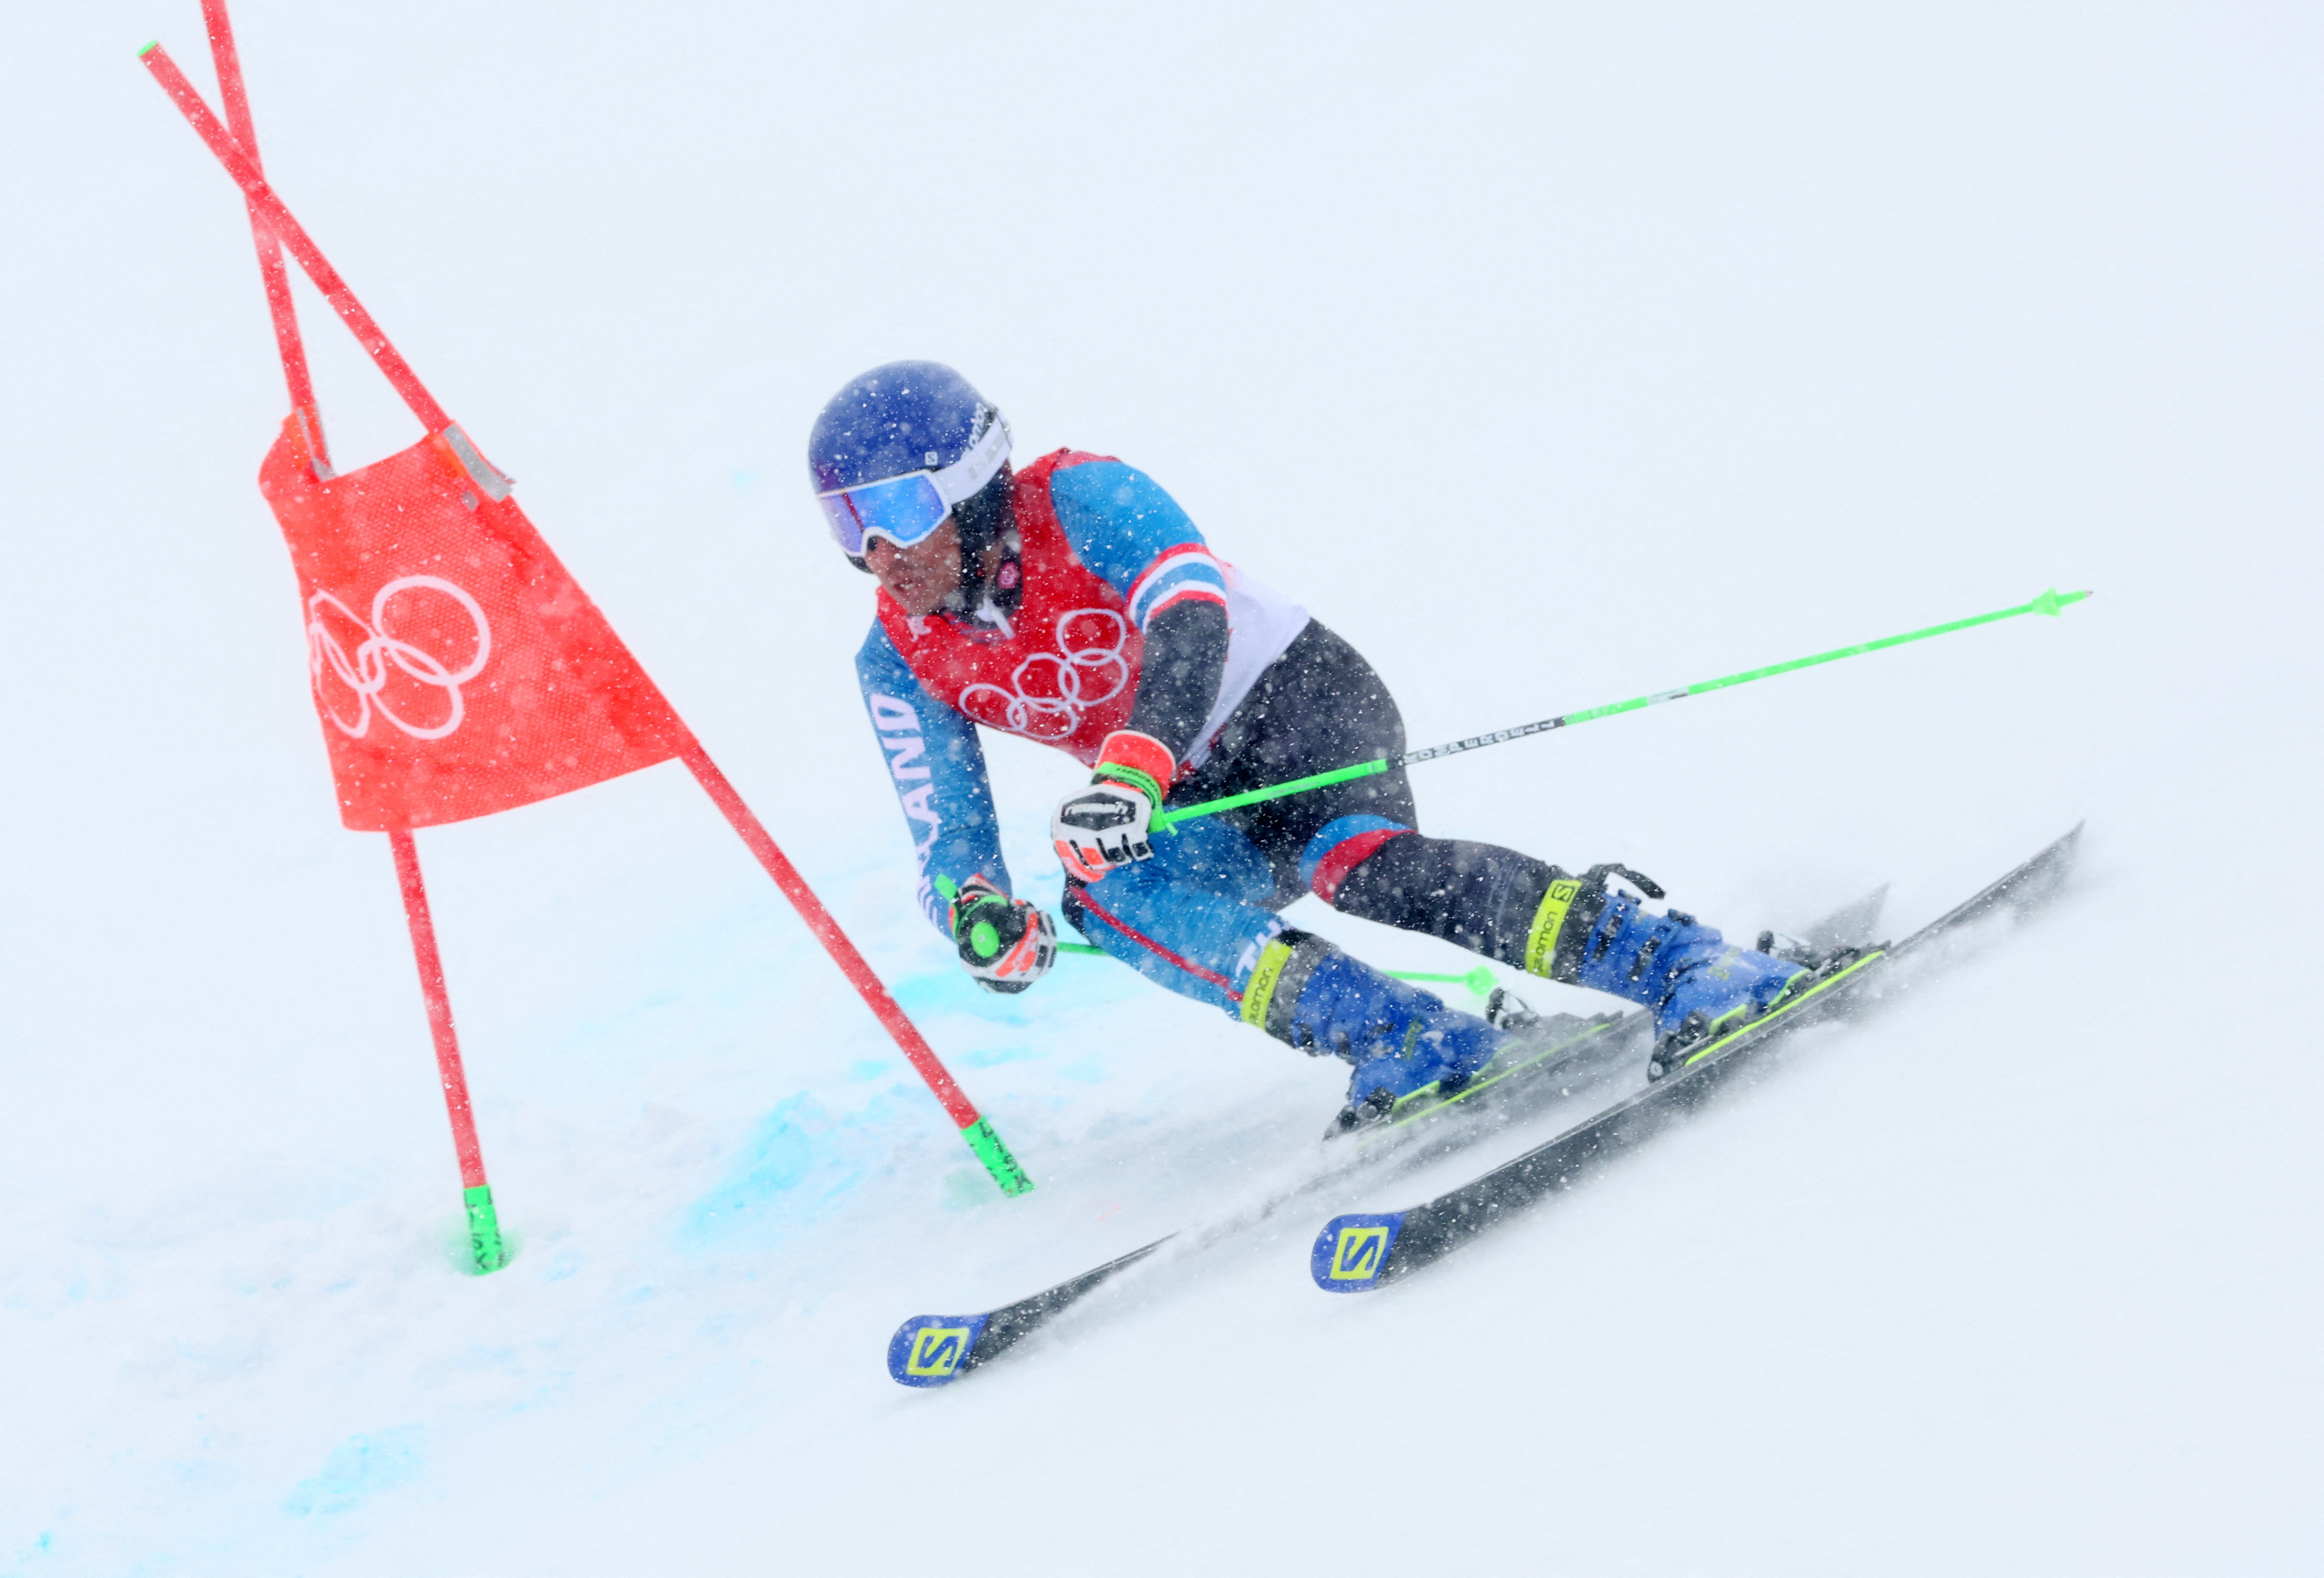 Nicola Zanon of Thailand in action. 2022 Beijing Olympics - Alpine Skiing - Men's Giant Slalom Run 1 - National Alpine Skiing Centre, Yanqing district, Beijing, China - February 13, 2022. REUTERS/Denis Balibouse